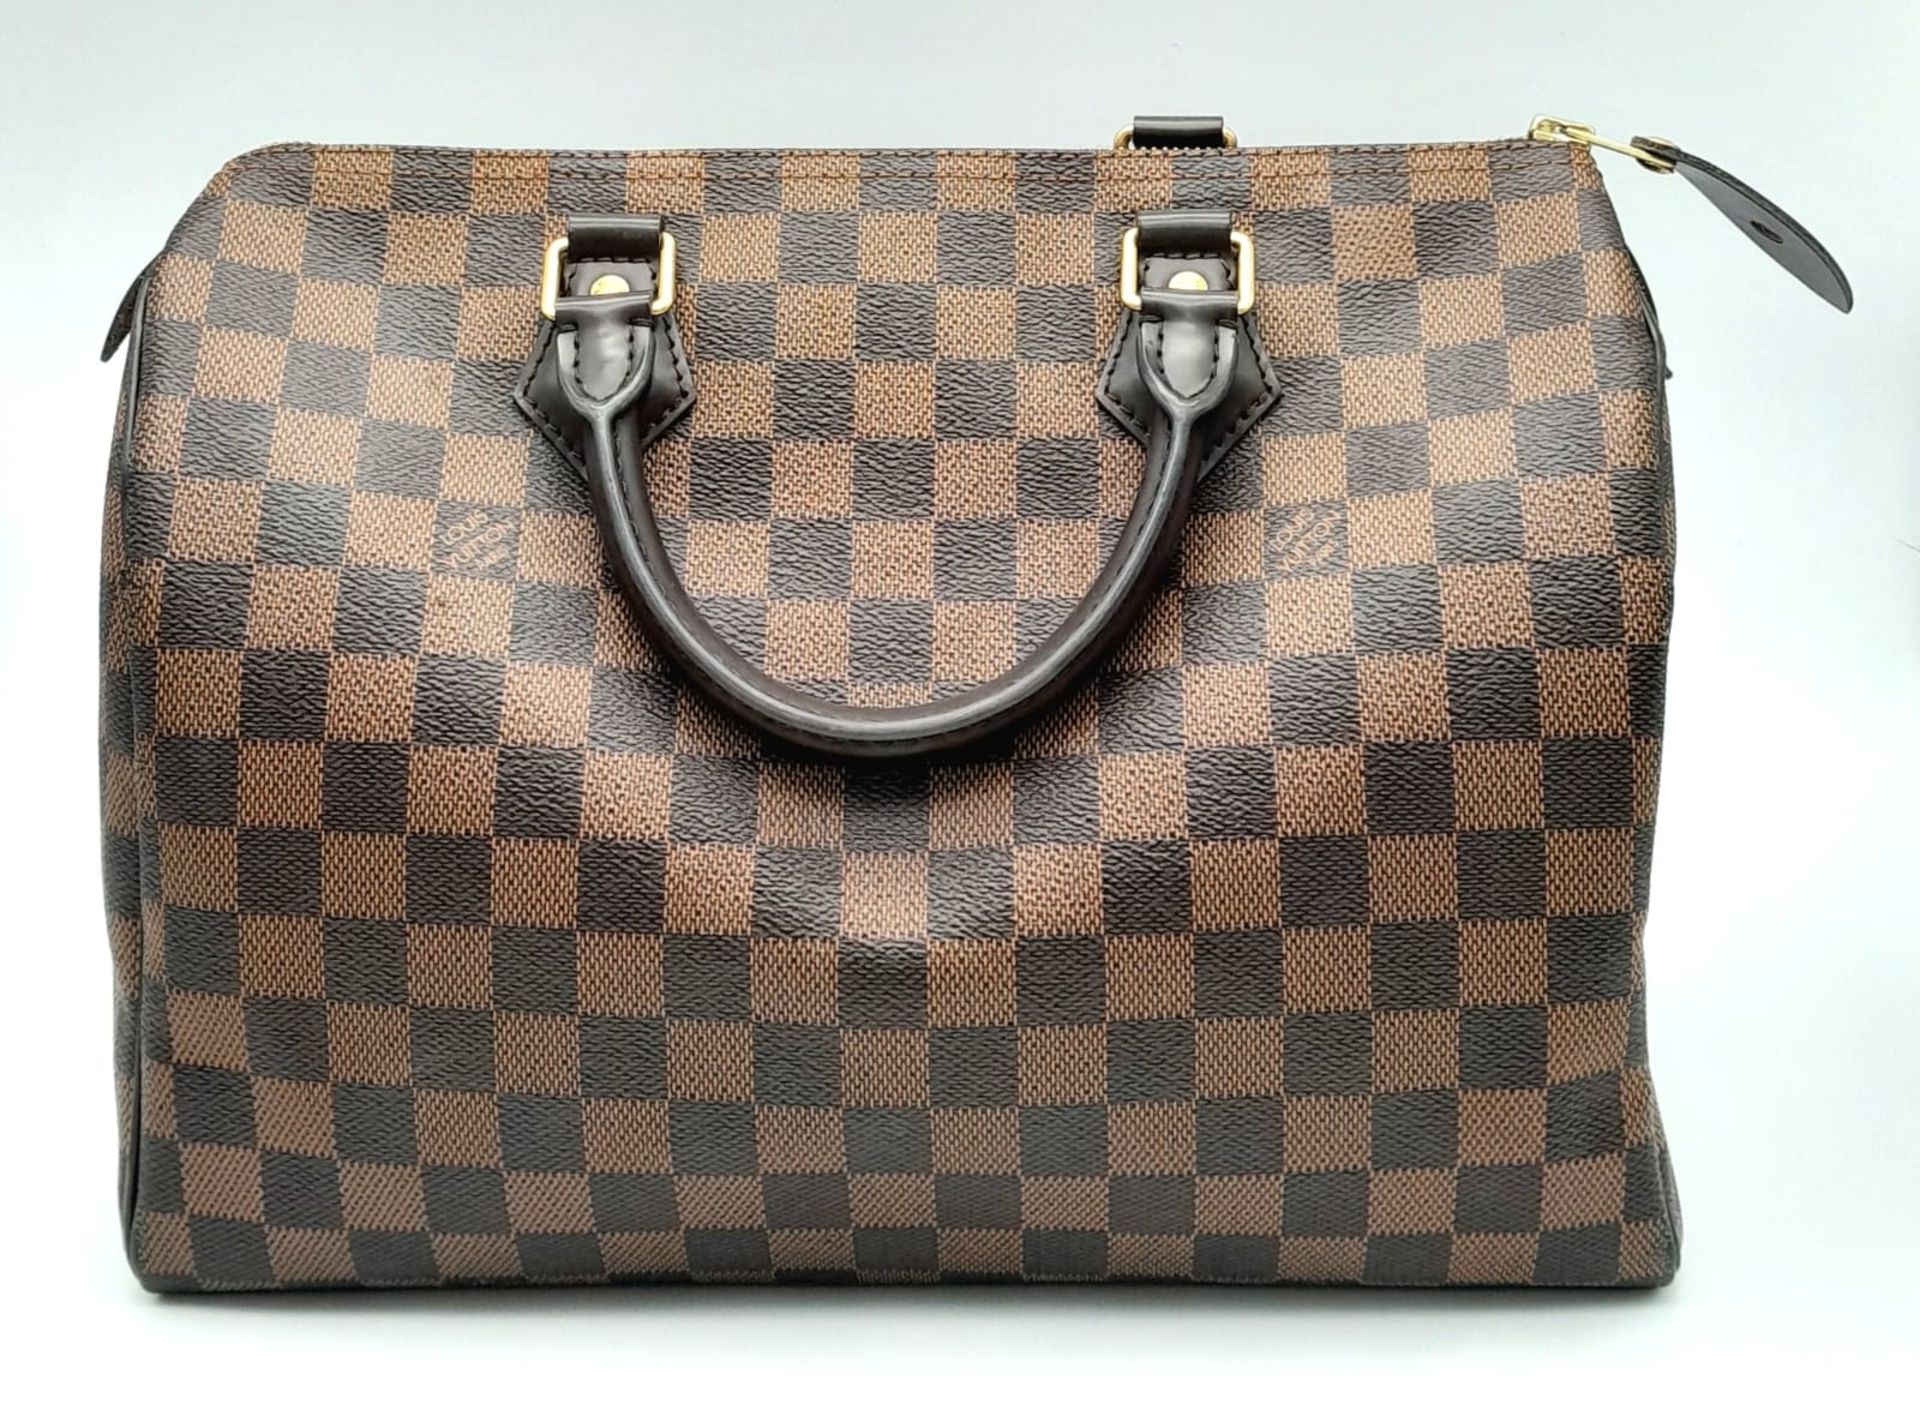 A Louis Vuitton Speedy 30 ebony damier canvas Handbag. Accessories to include padlock and key. - Image 3 of 7